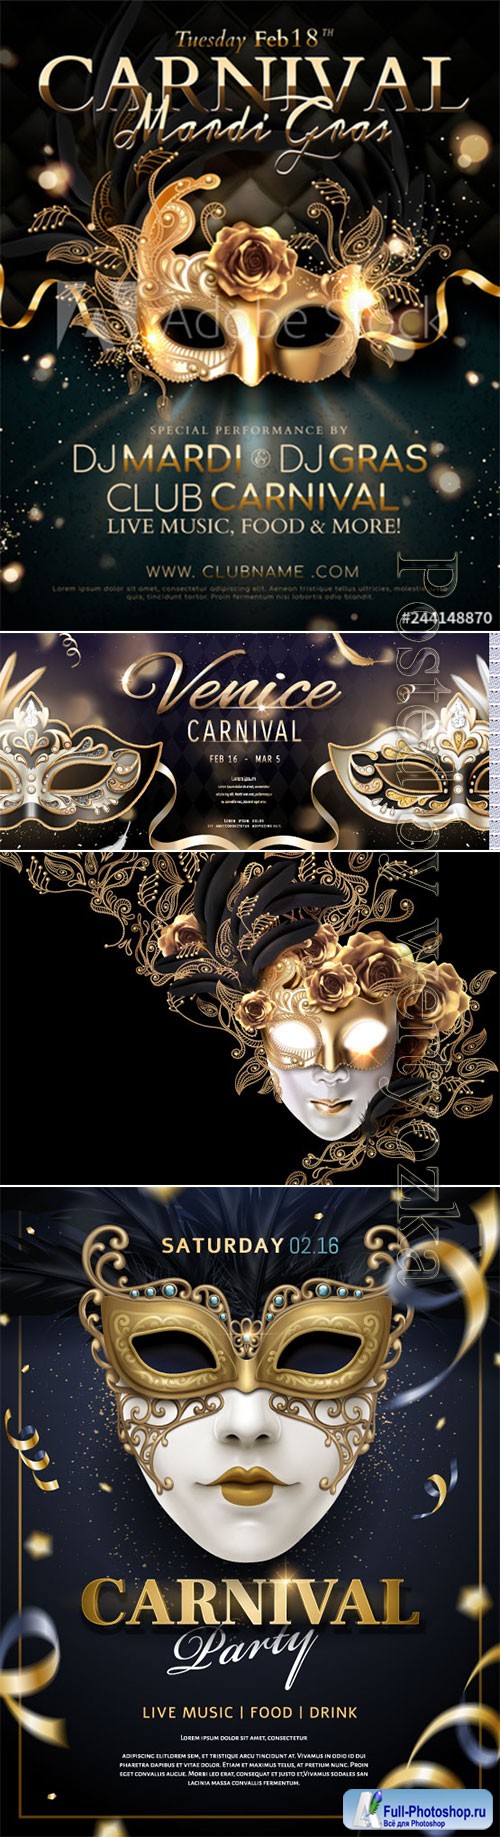 Venice carnival design, Mardi gras